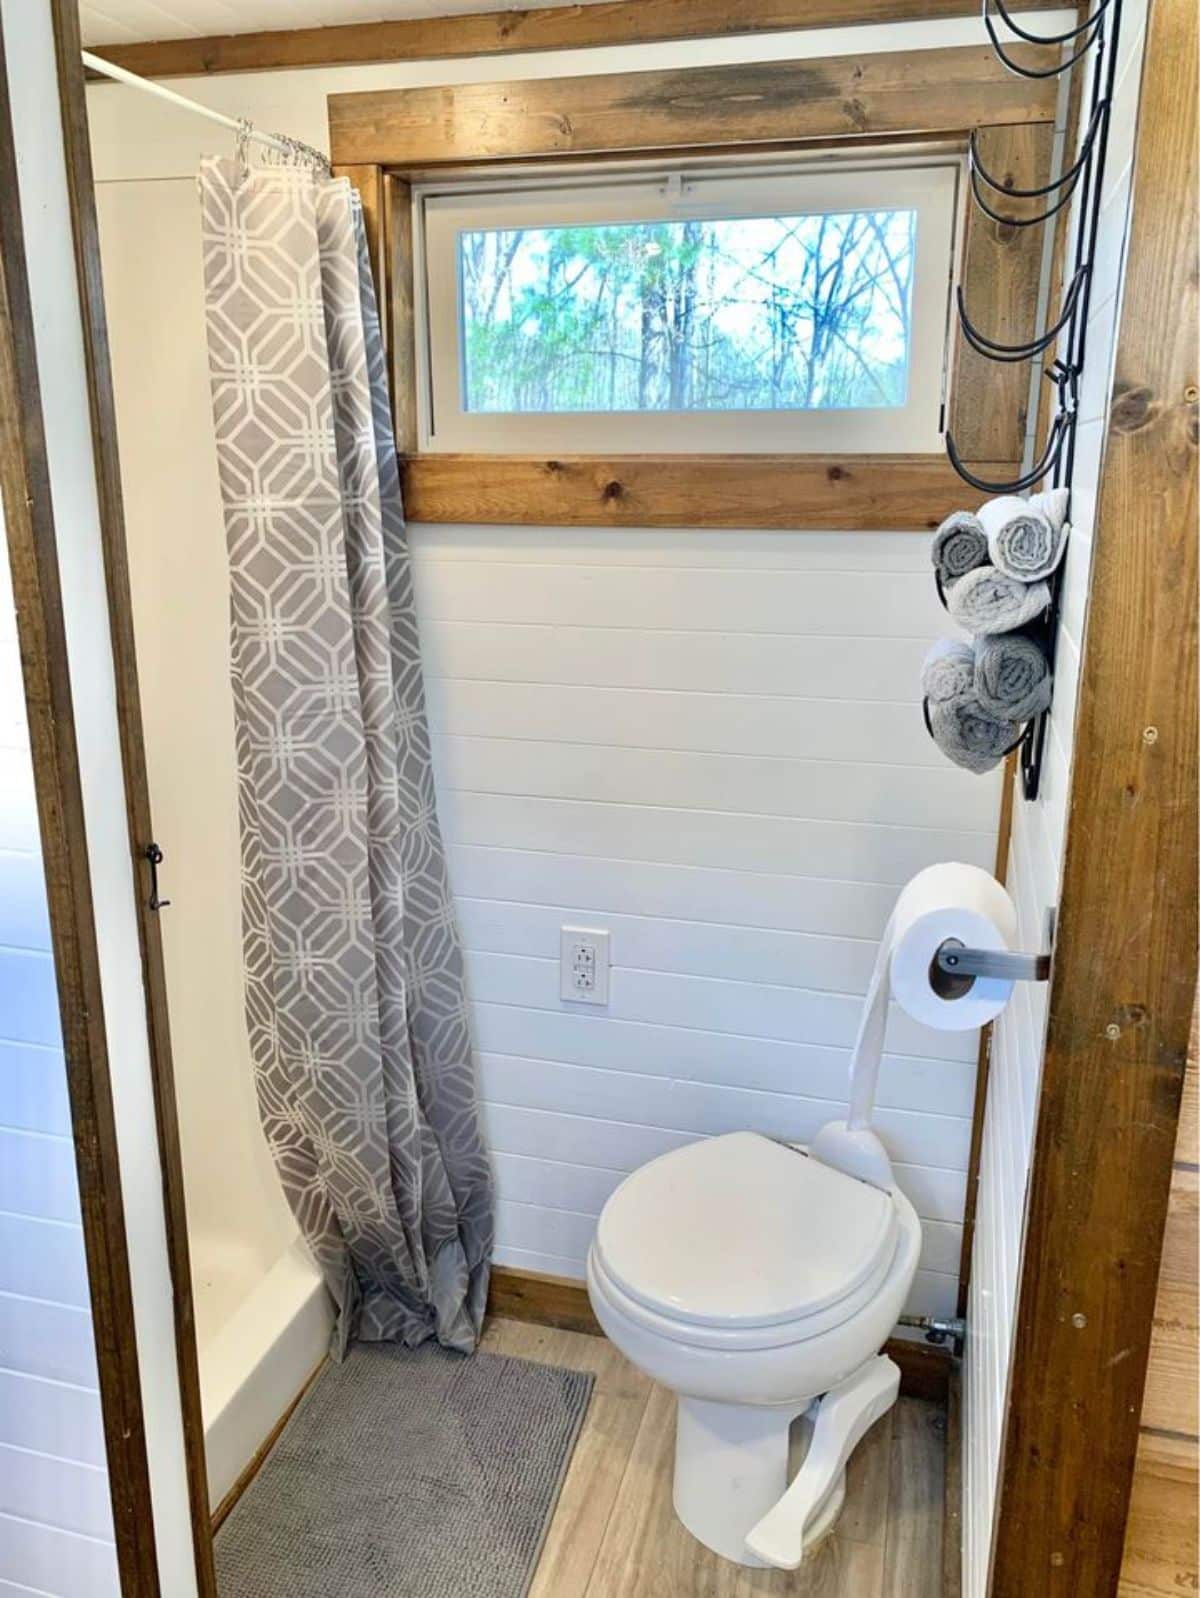 standard toilet in bathroom of 28’ NOAH certified tiny home